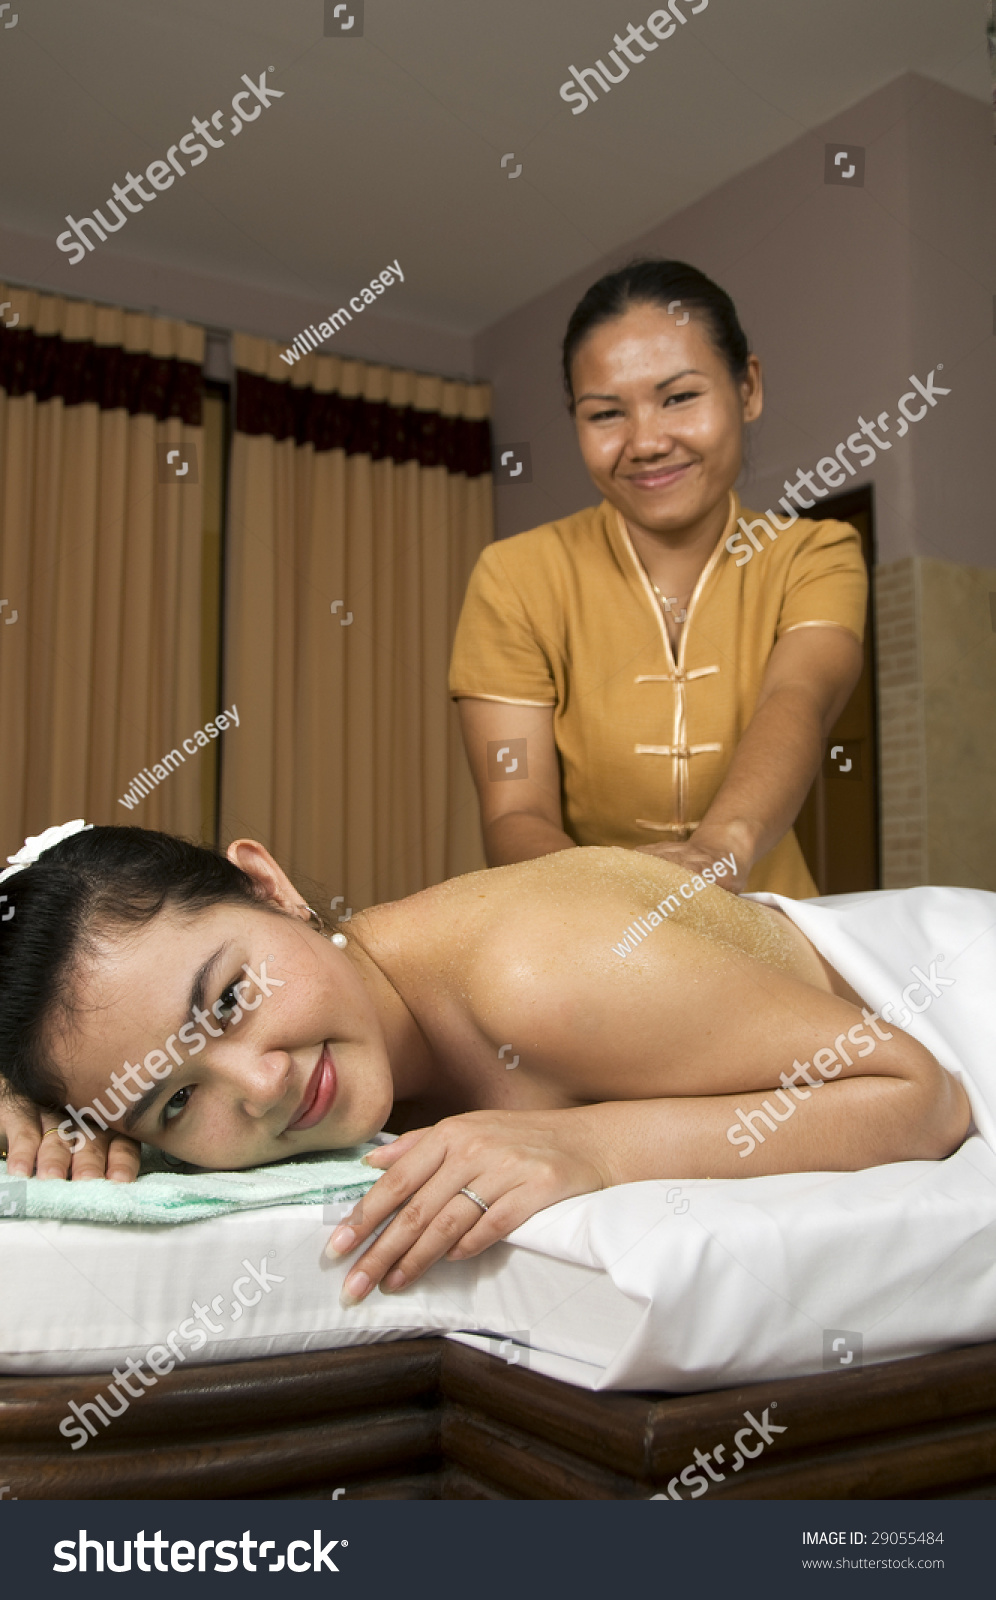 Dansk porrfilm massage karlstad